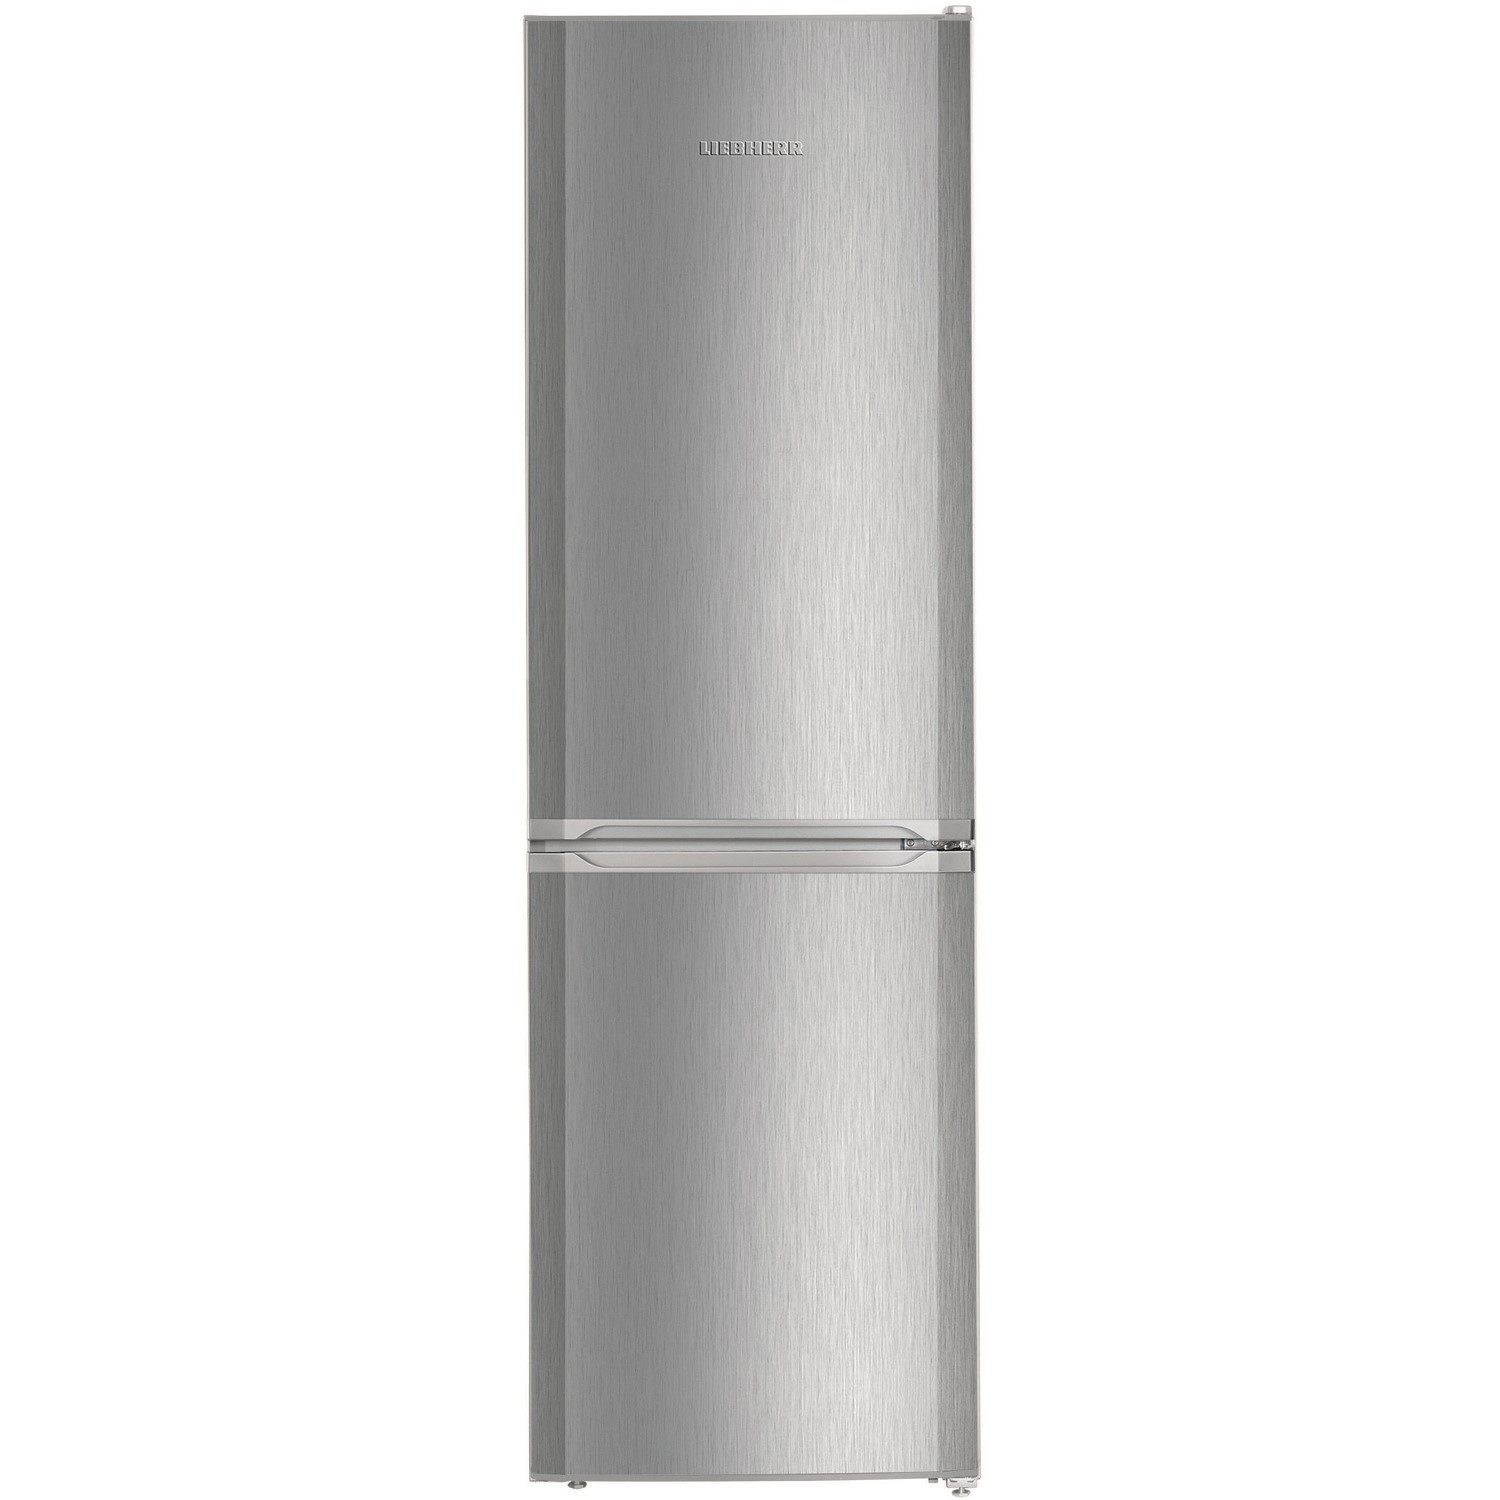 Liebherr 296 Litre 60/40 Freestanding Fridge Freezer - Stainless steel look